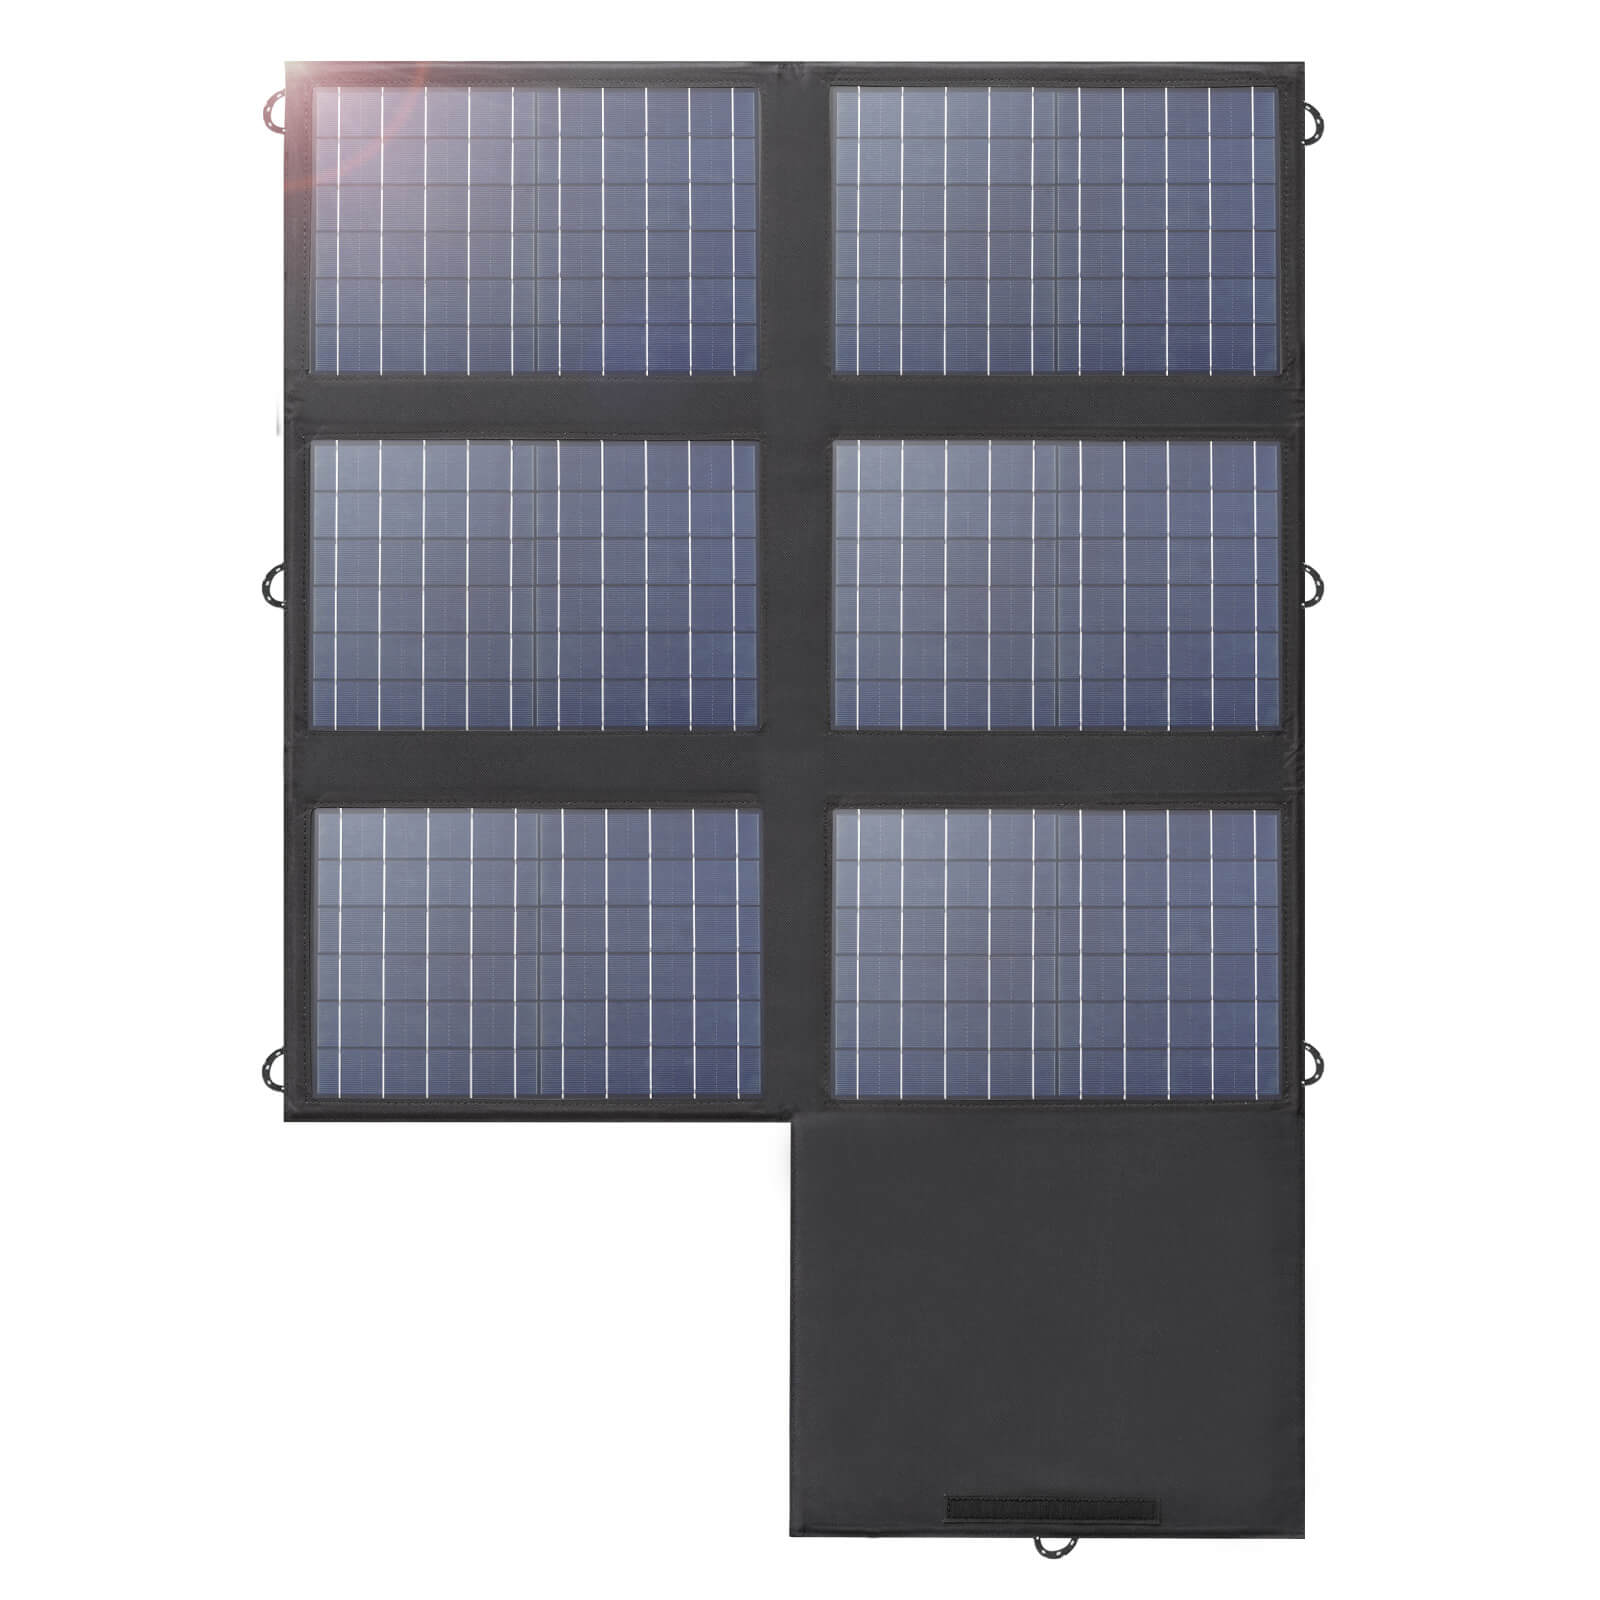 ALLPOWERS SP026 Polysilicon Foldable Solar Panel 60W